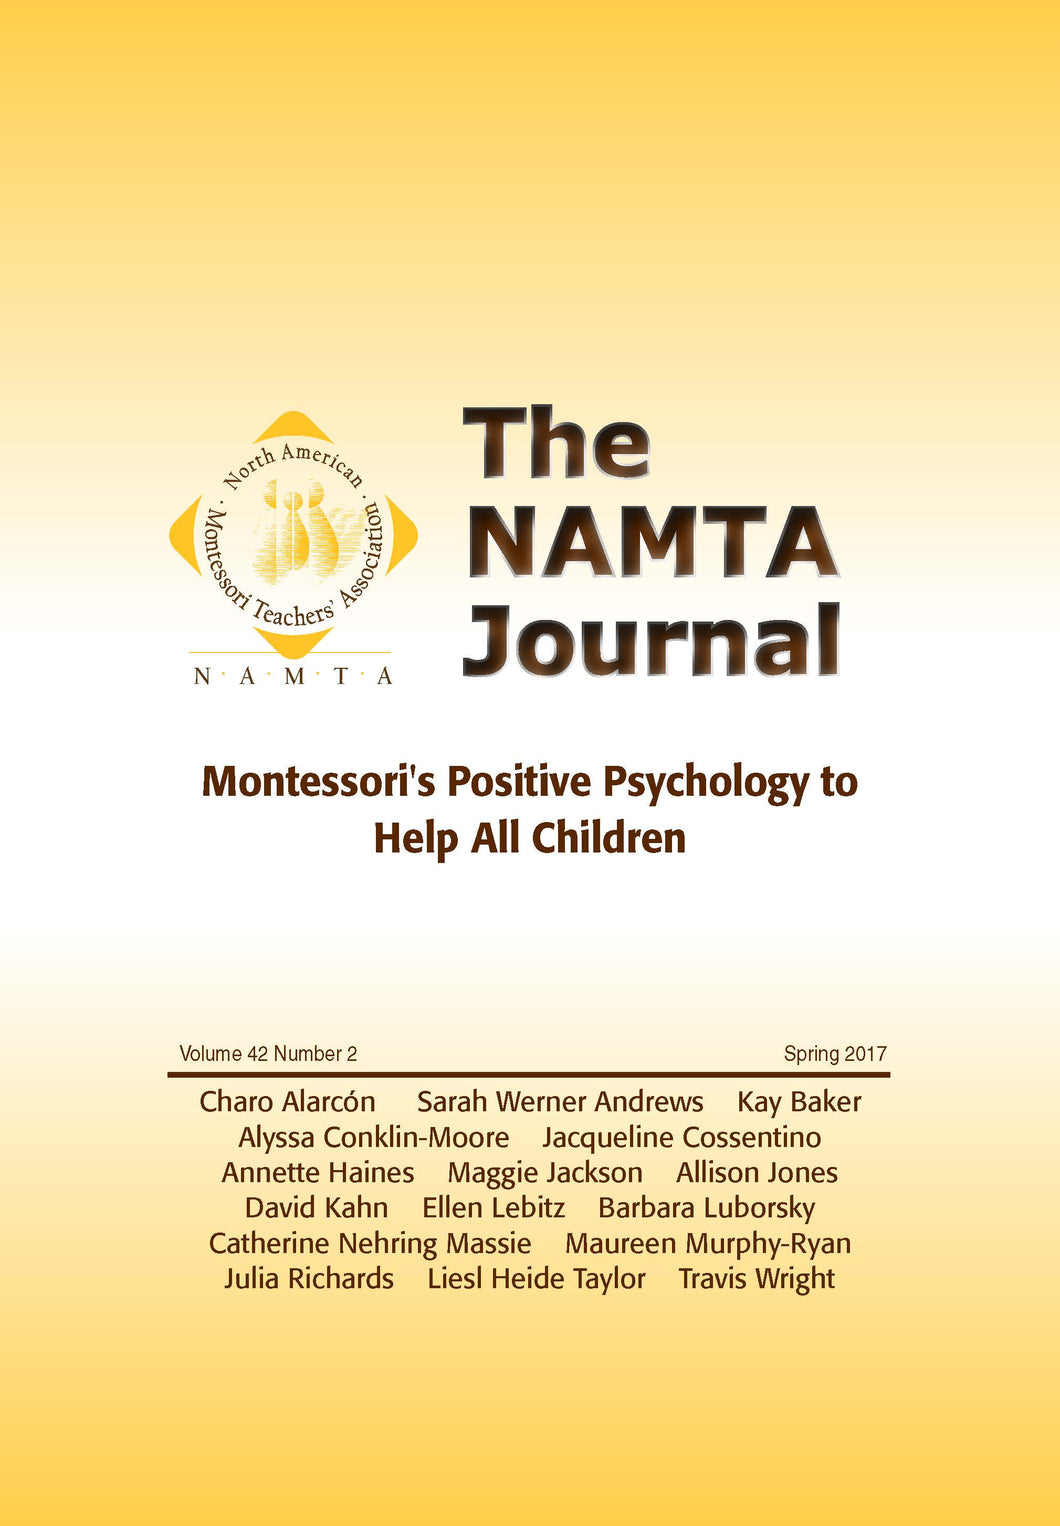 Vol 42, No 2: Montessori's Positive Psychology to Help All children